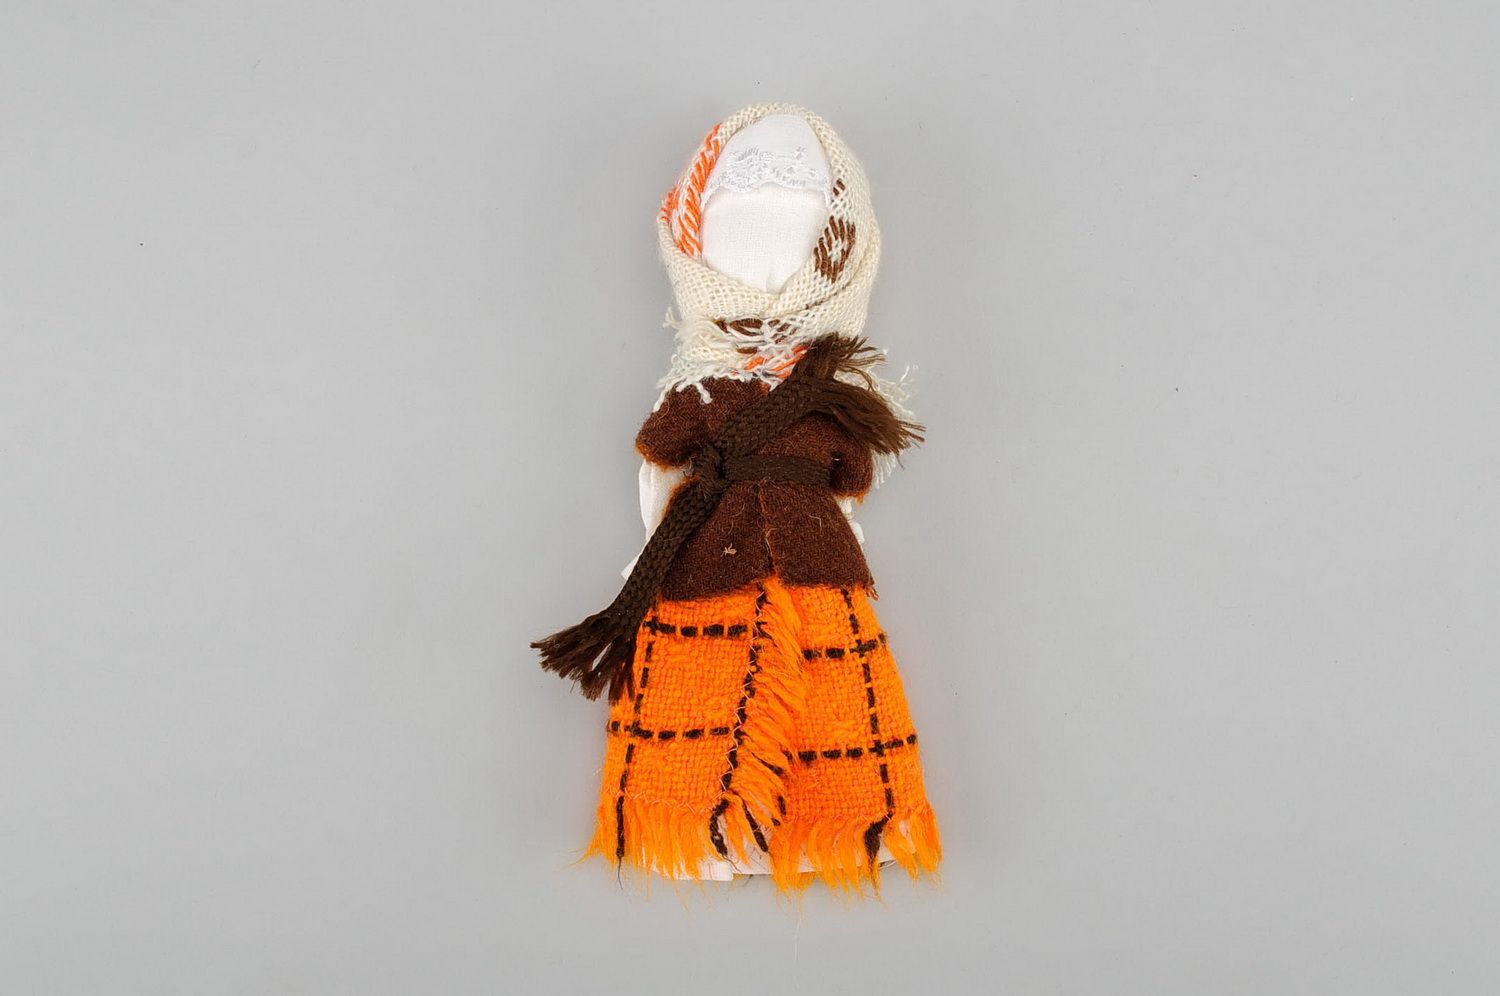 Motanka-poupée ethnique en tissu faite main photo 3